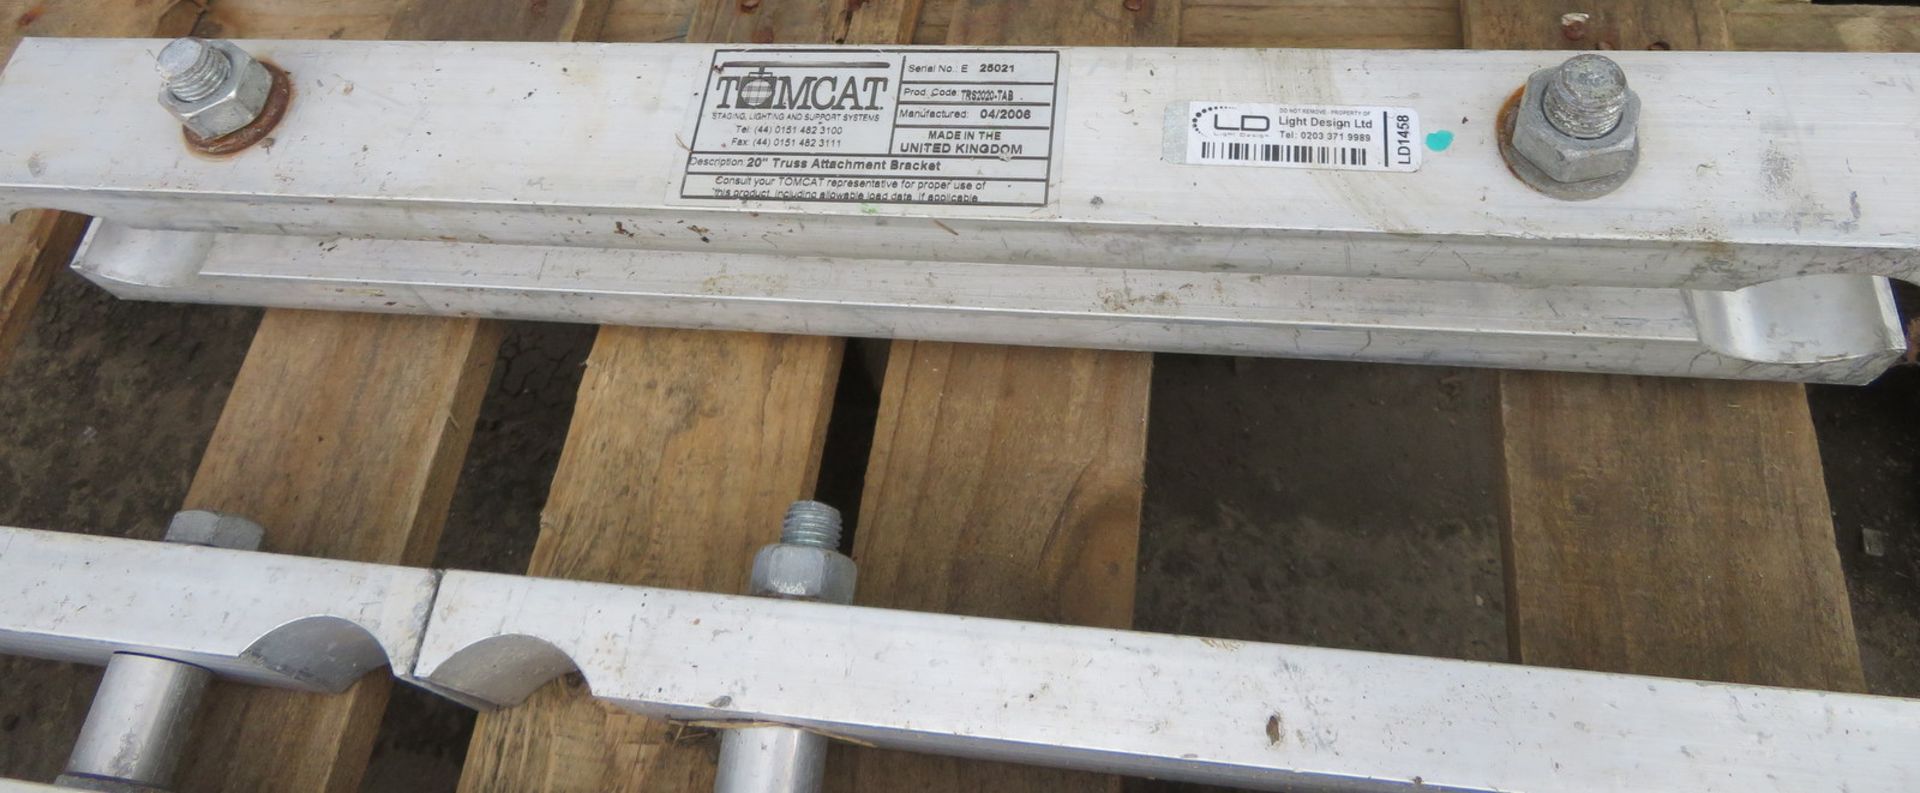 15x Tomcat 20" truss attachment bracket - Image 6 of 7